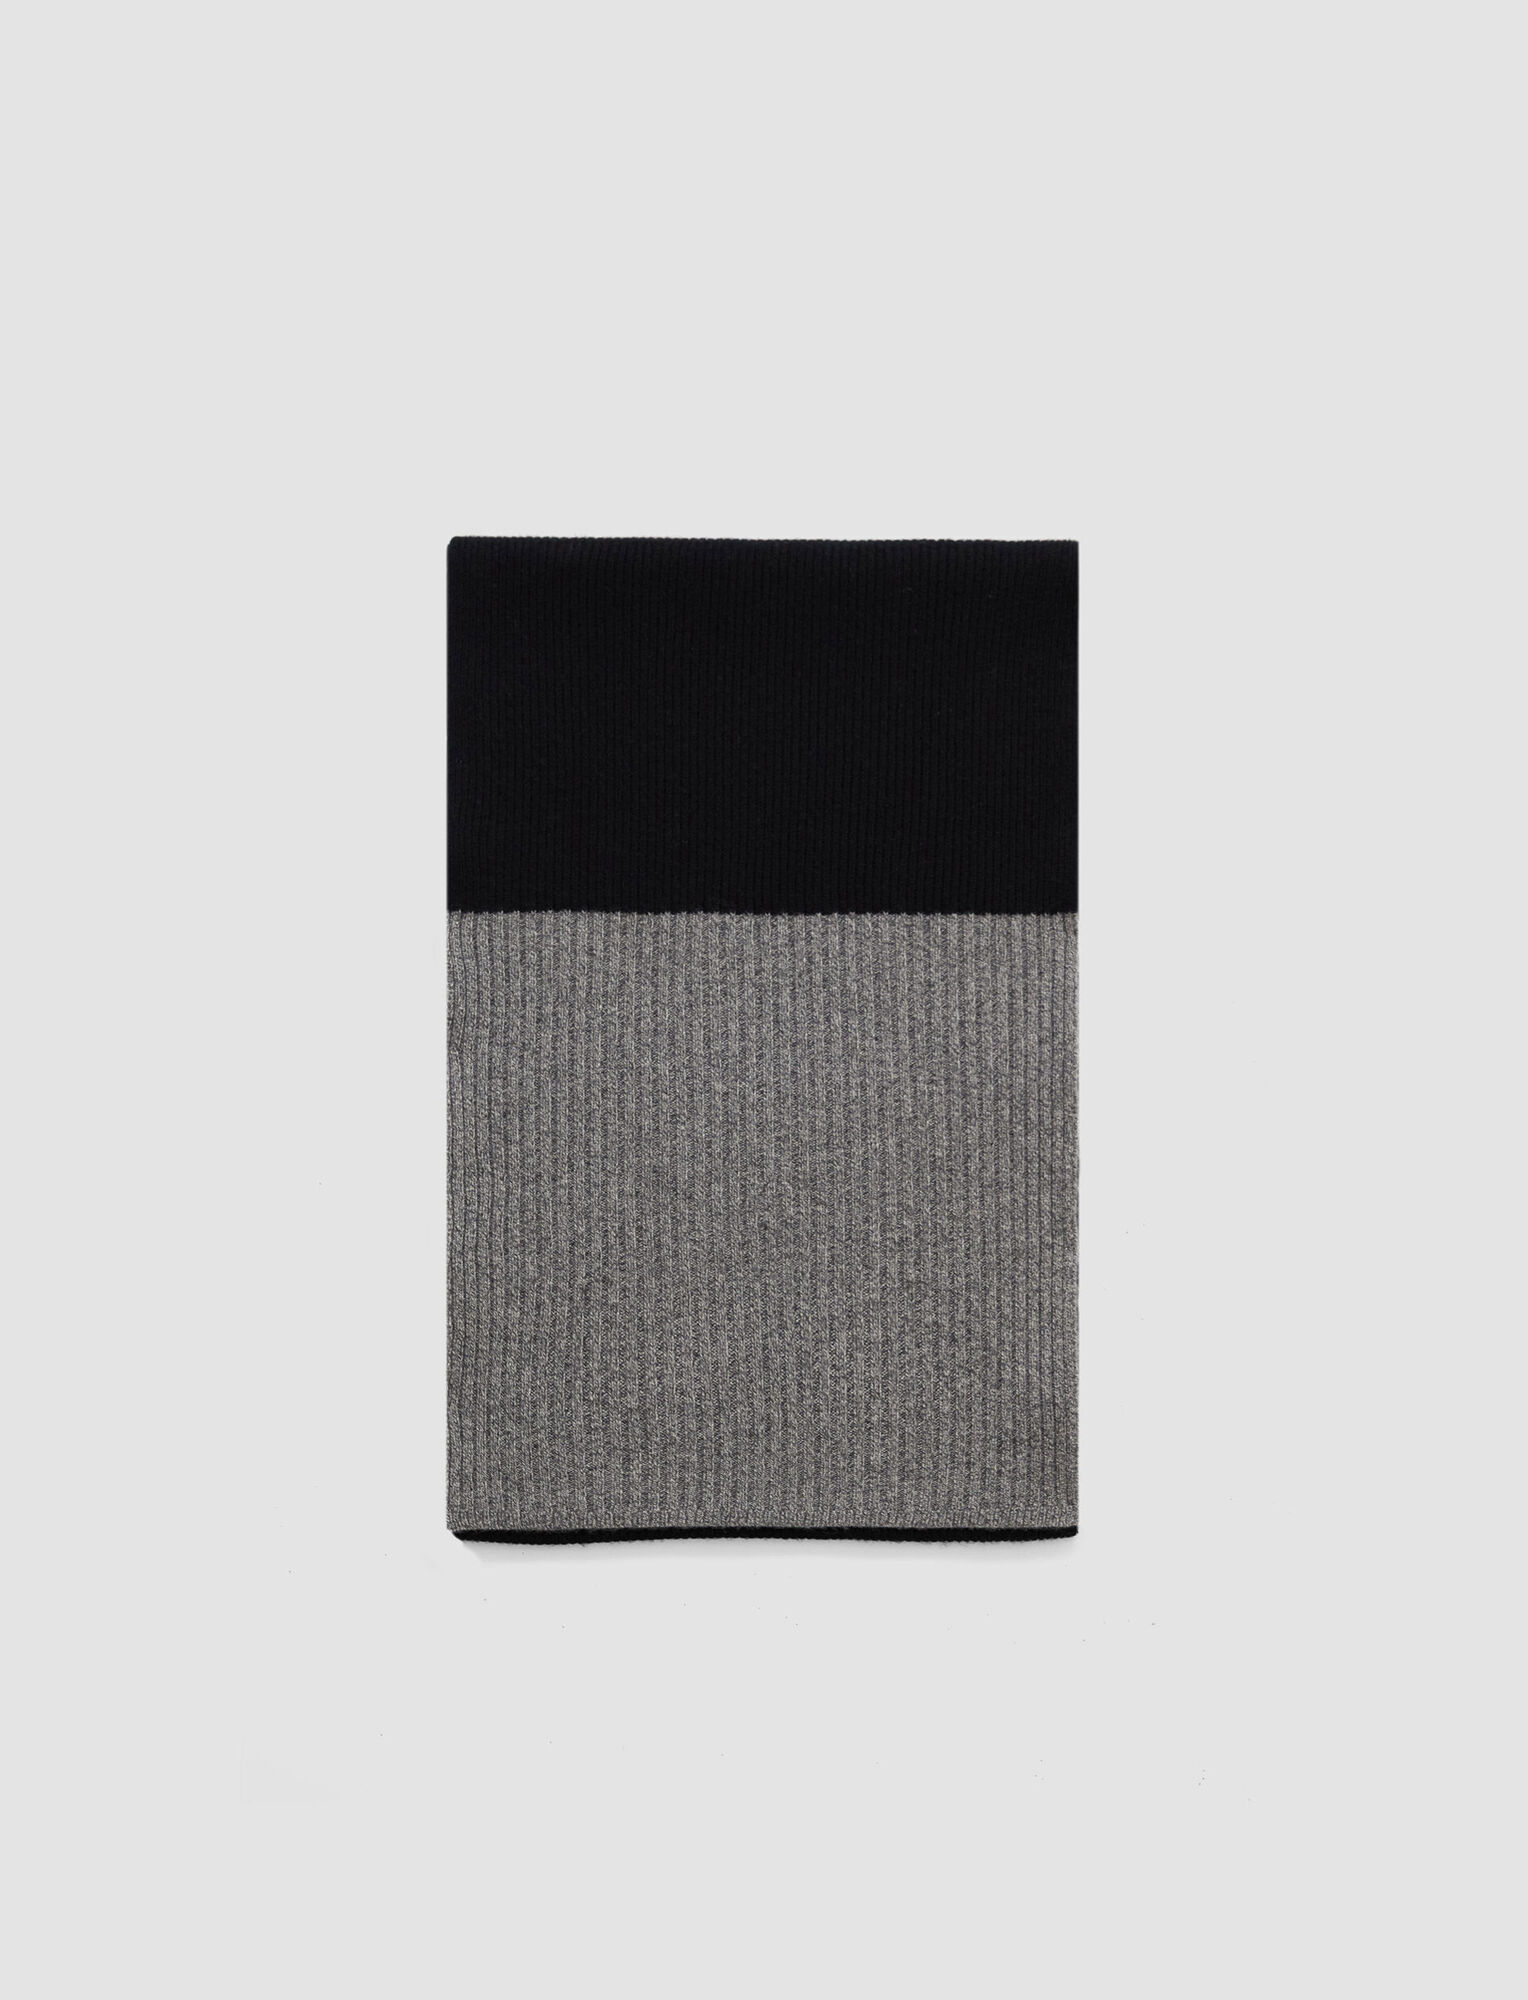 Joseph, Écharpe color block, in Black/Grey